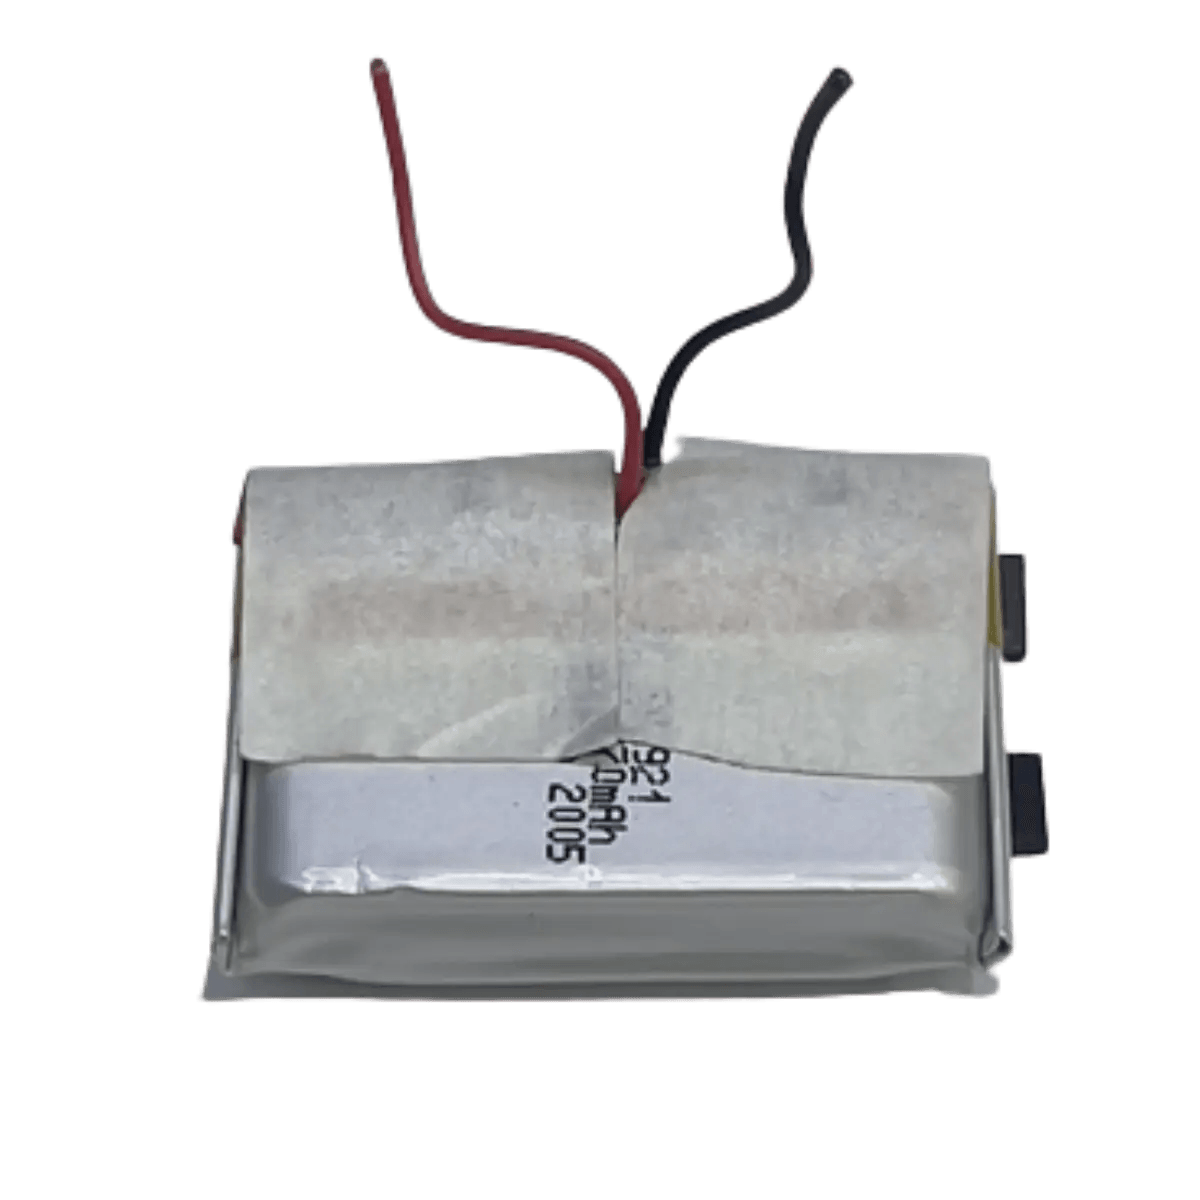 Batterie - Li-Po - 3.7V - 270mAh - 502921